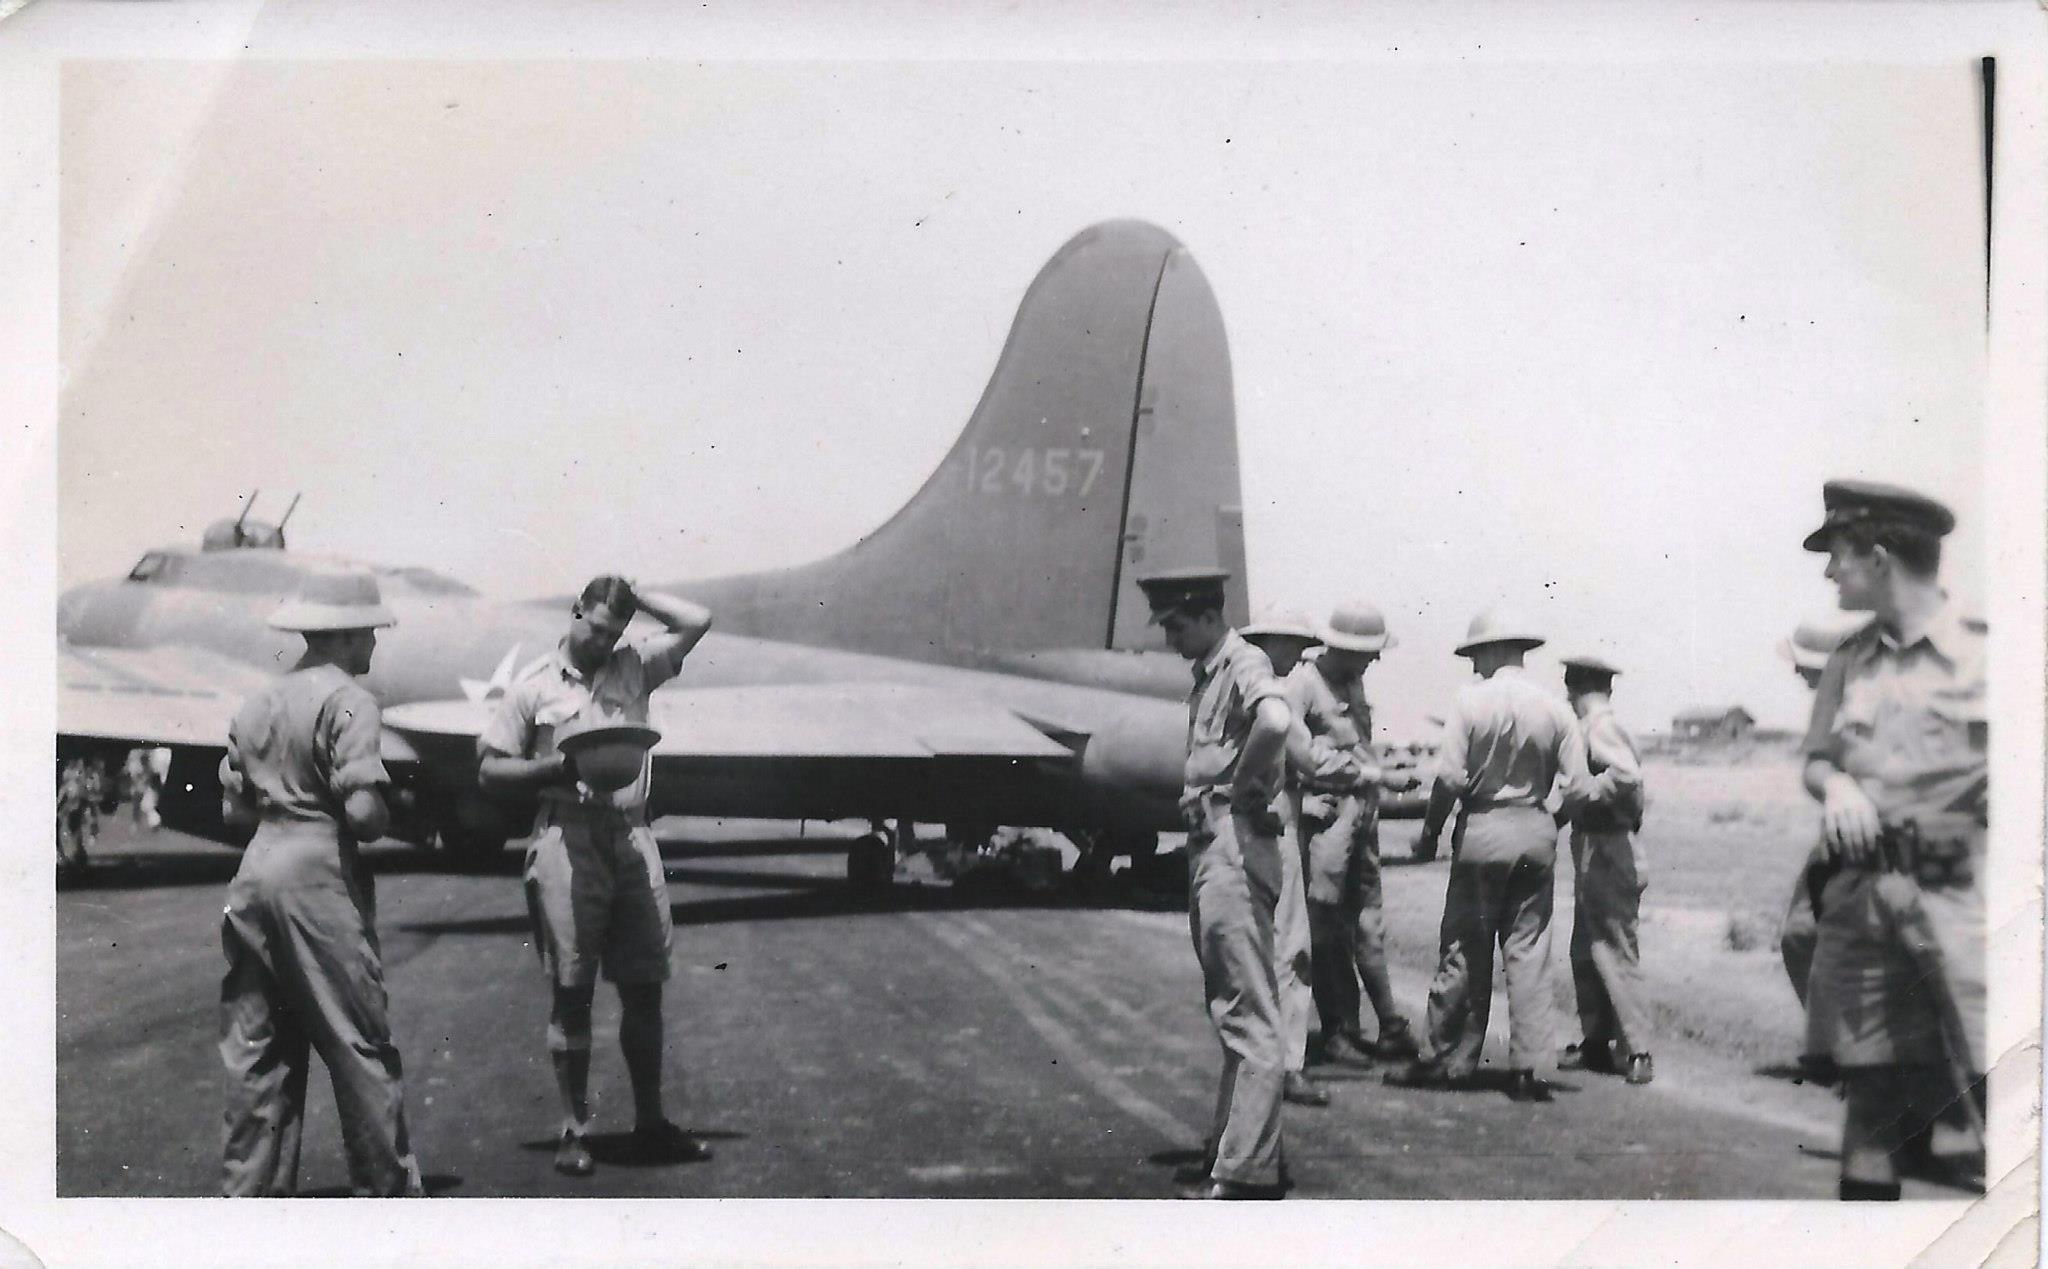 B-17 #41-2457 / Per Diem